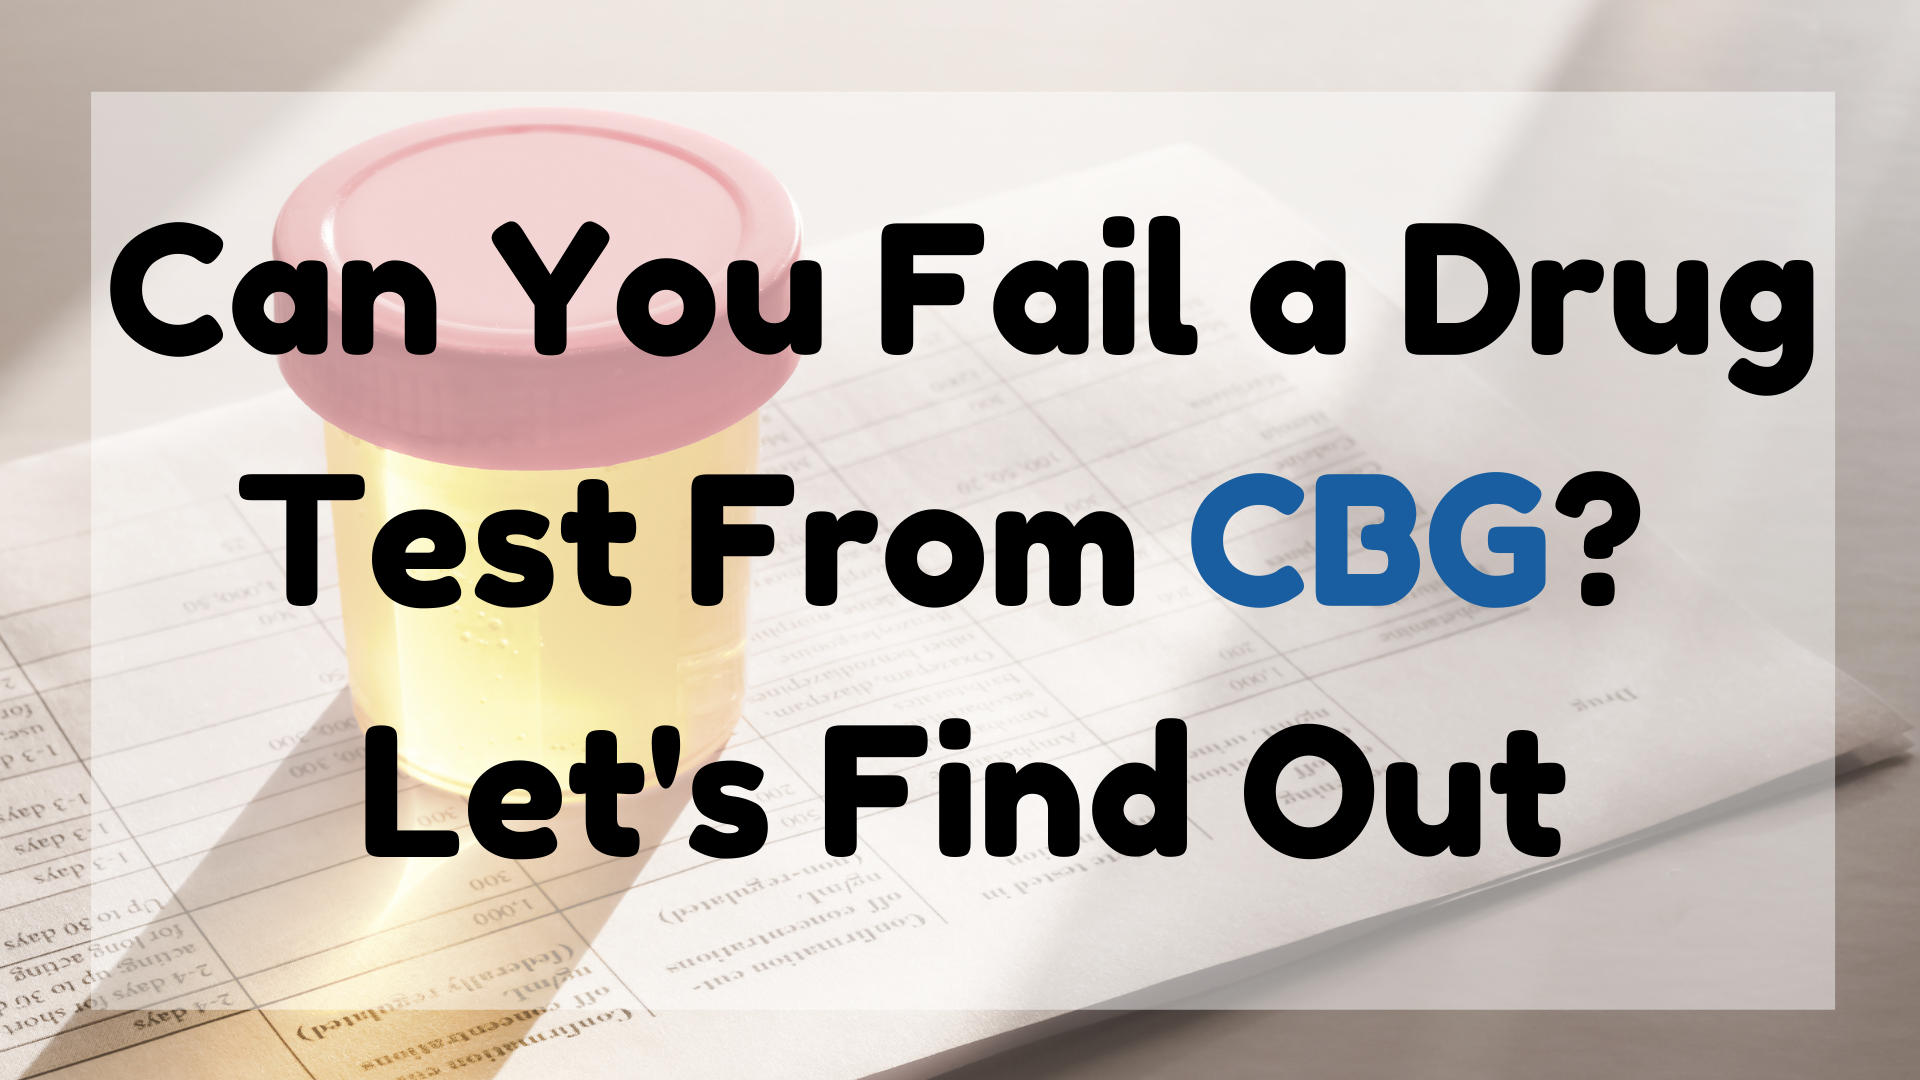 Can You Fail a Drug Test from CBG